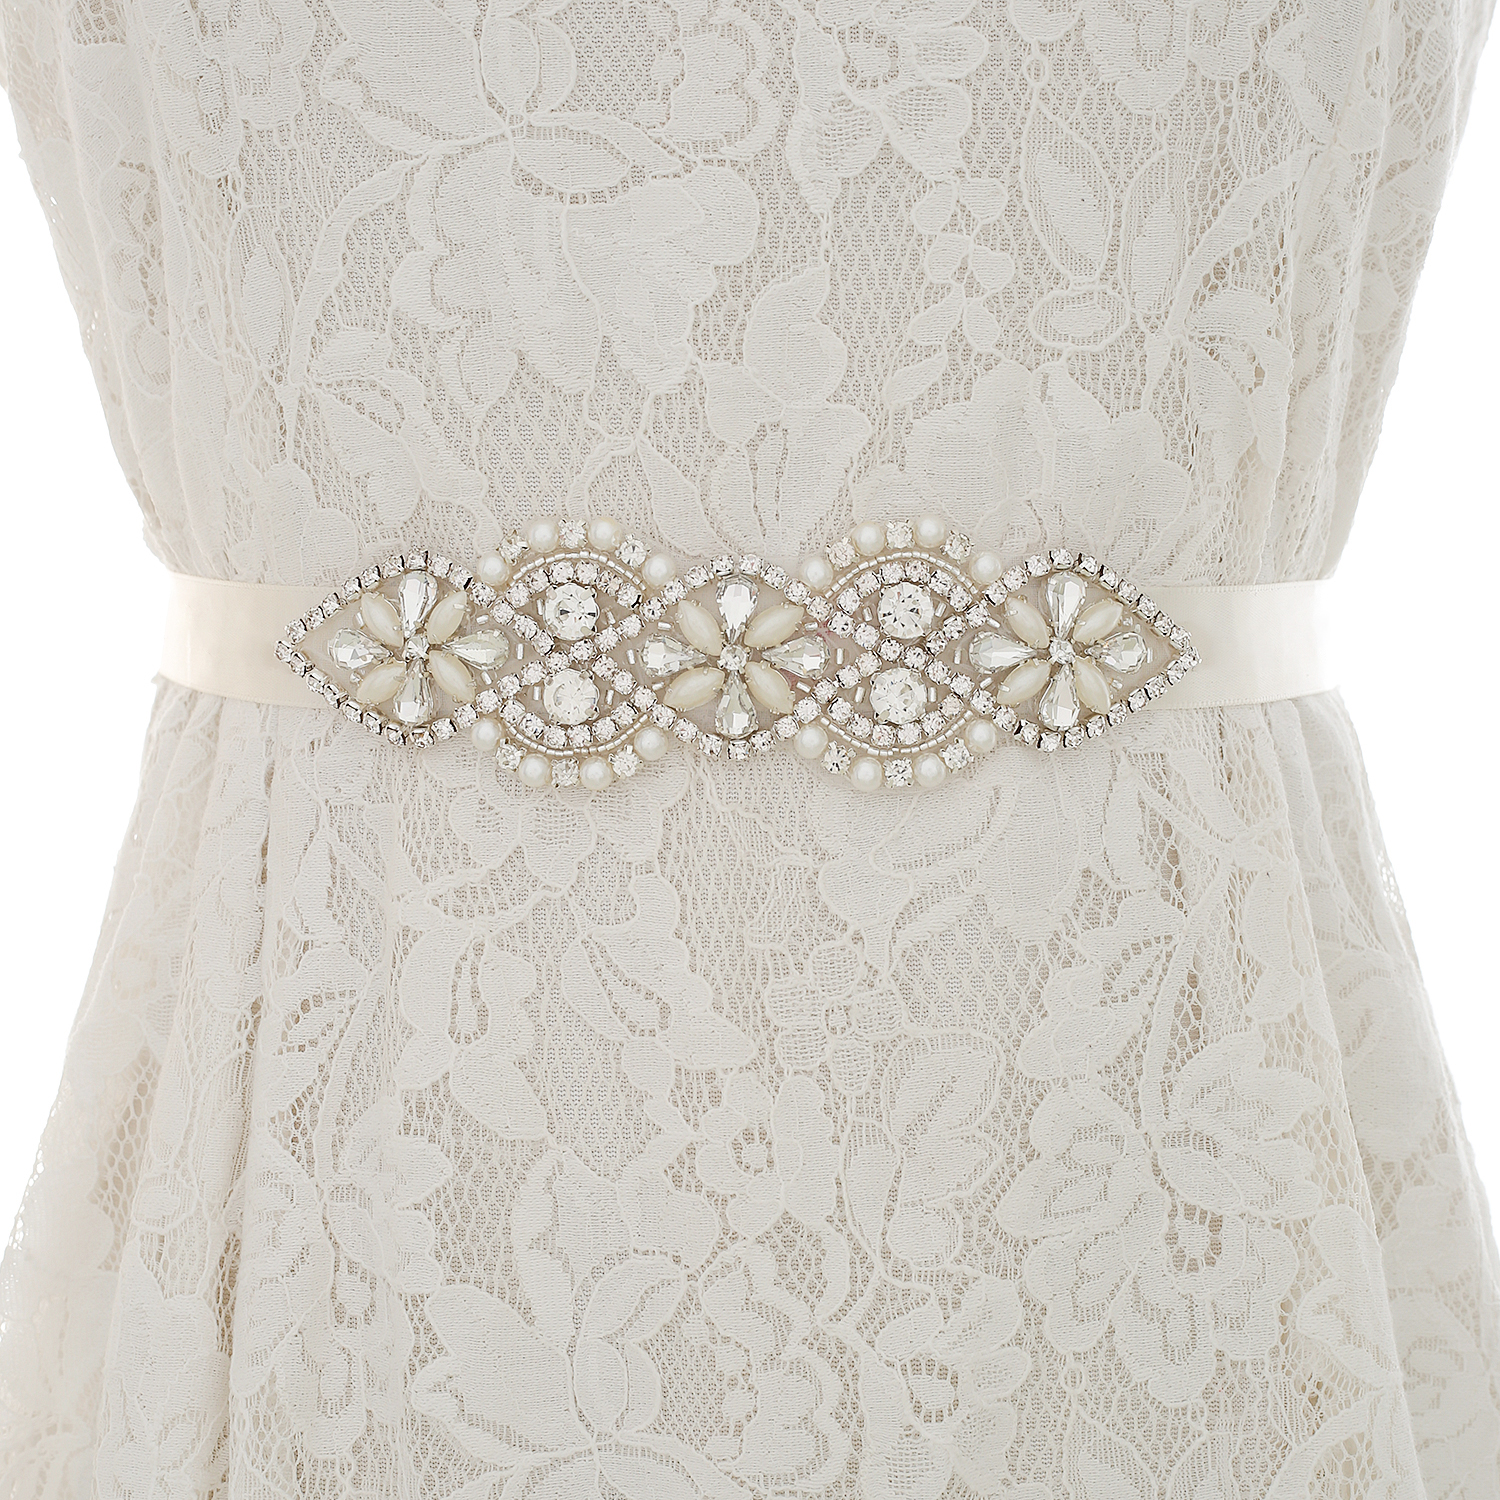 Silver Crystal Wedding Belt Rhinestones Bridal Belt Pearls Wedding Sash For Bridal Bridesmaid Dresses SD112S